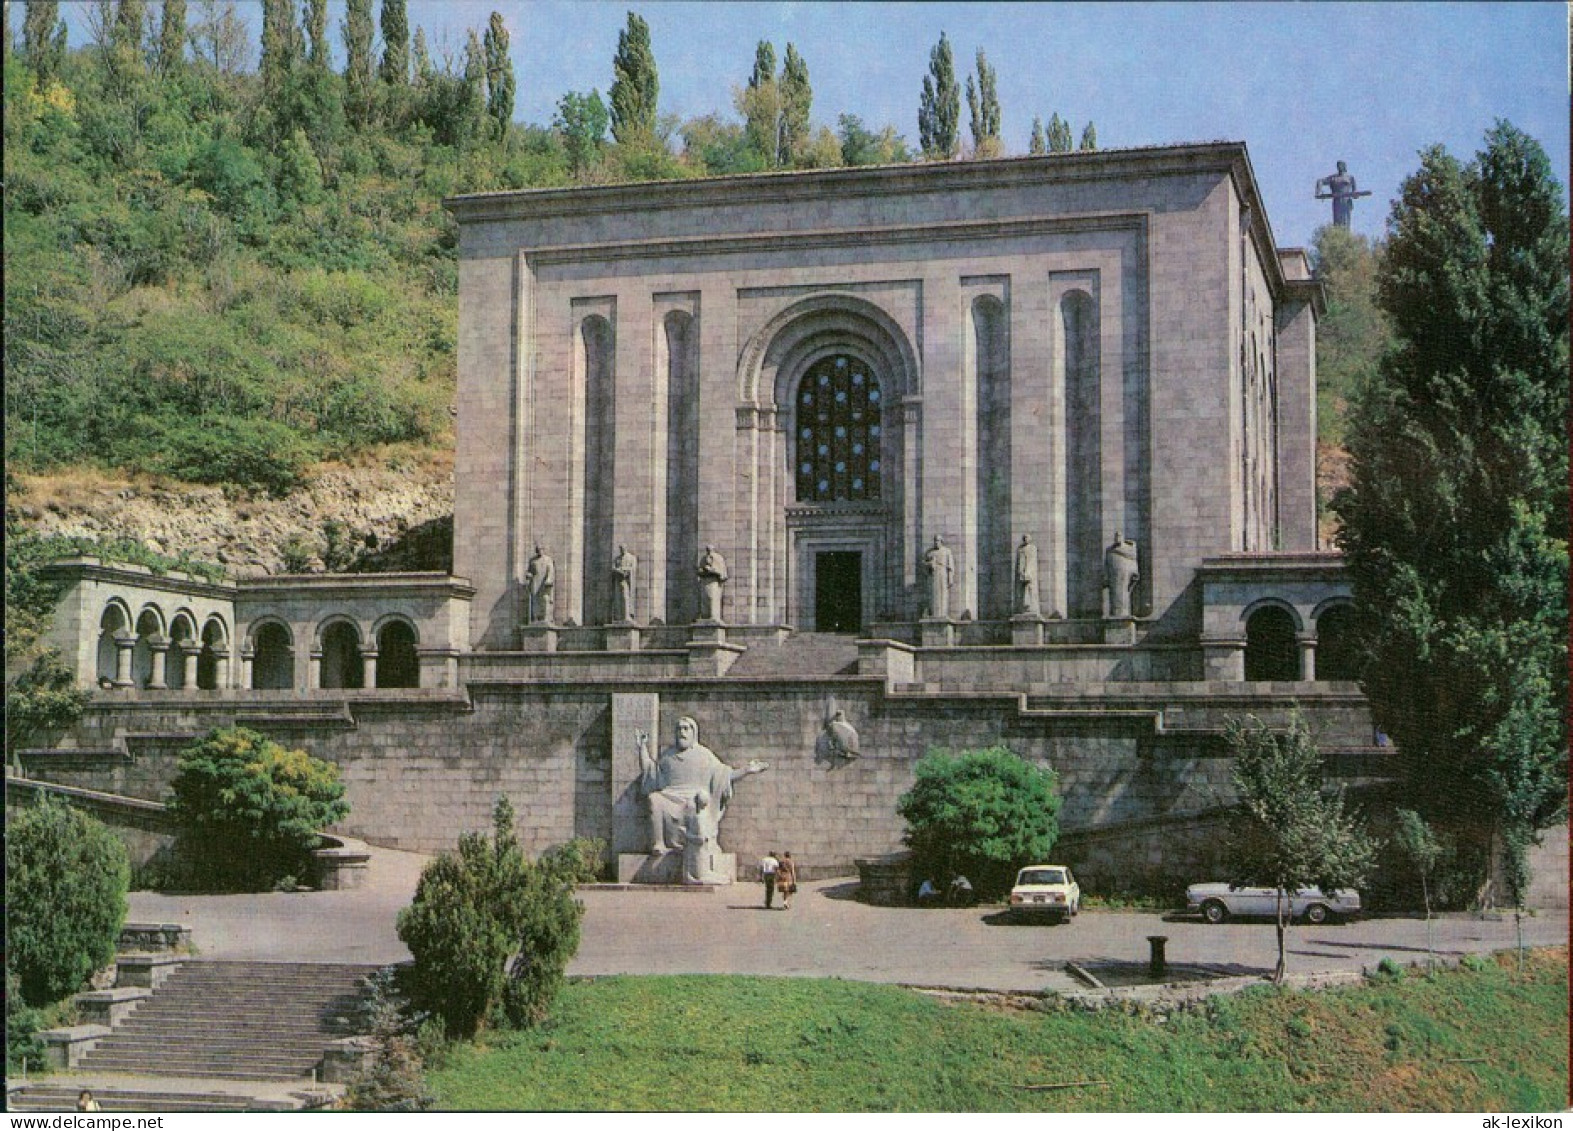 Jerewan Երևան Институт древних рукописей 1978 - Armenia